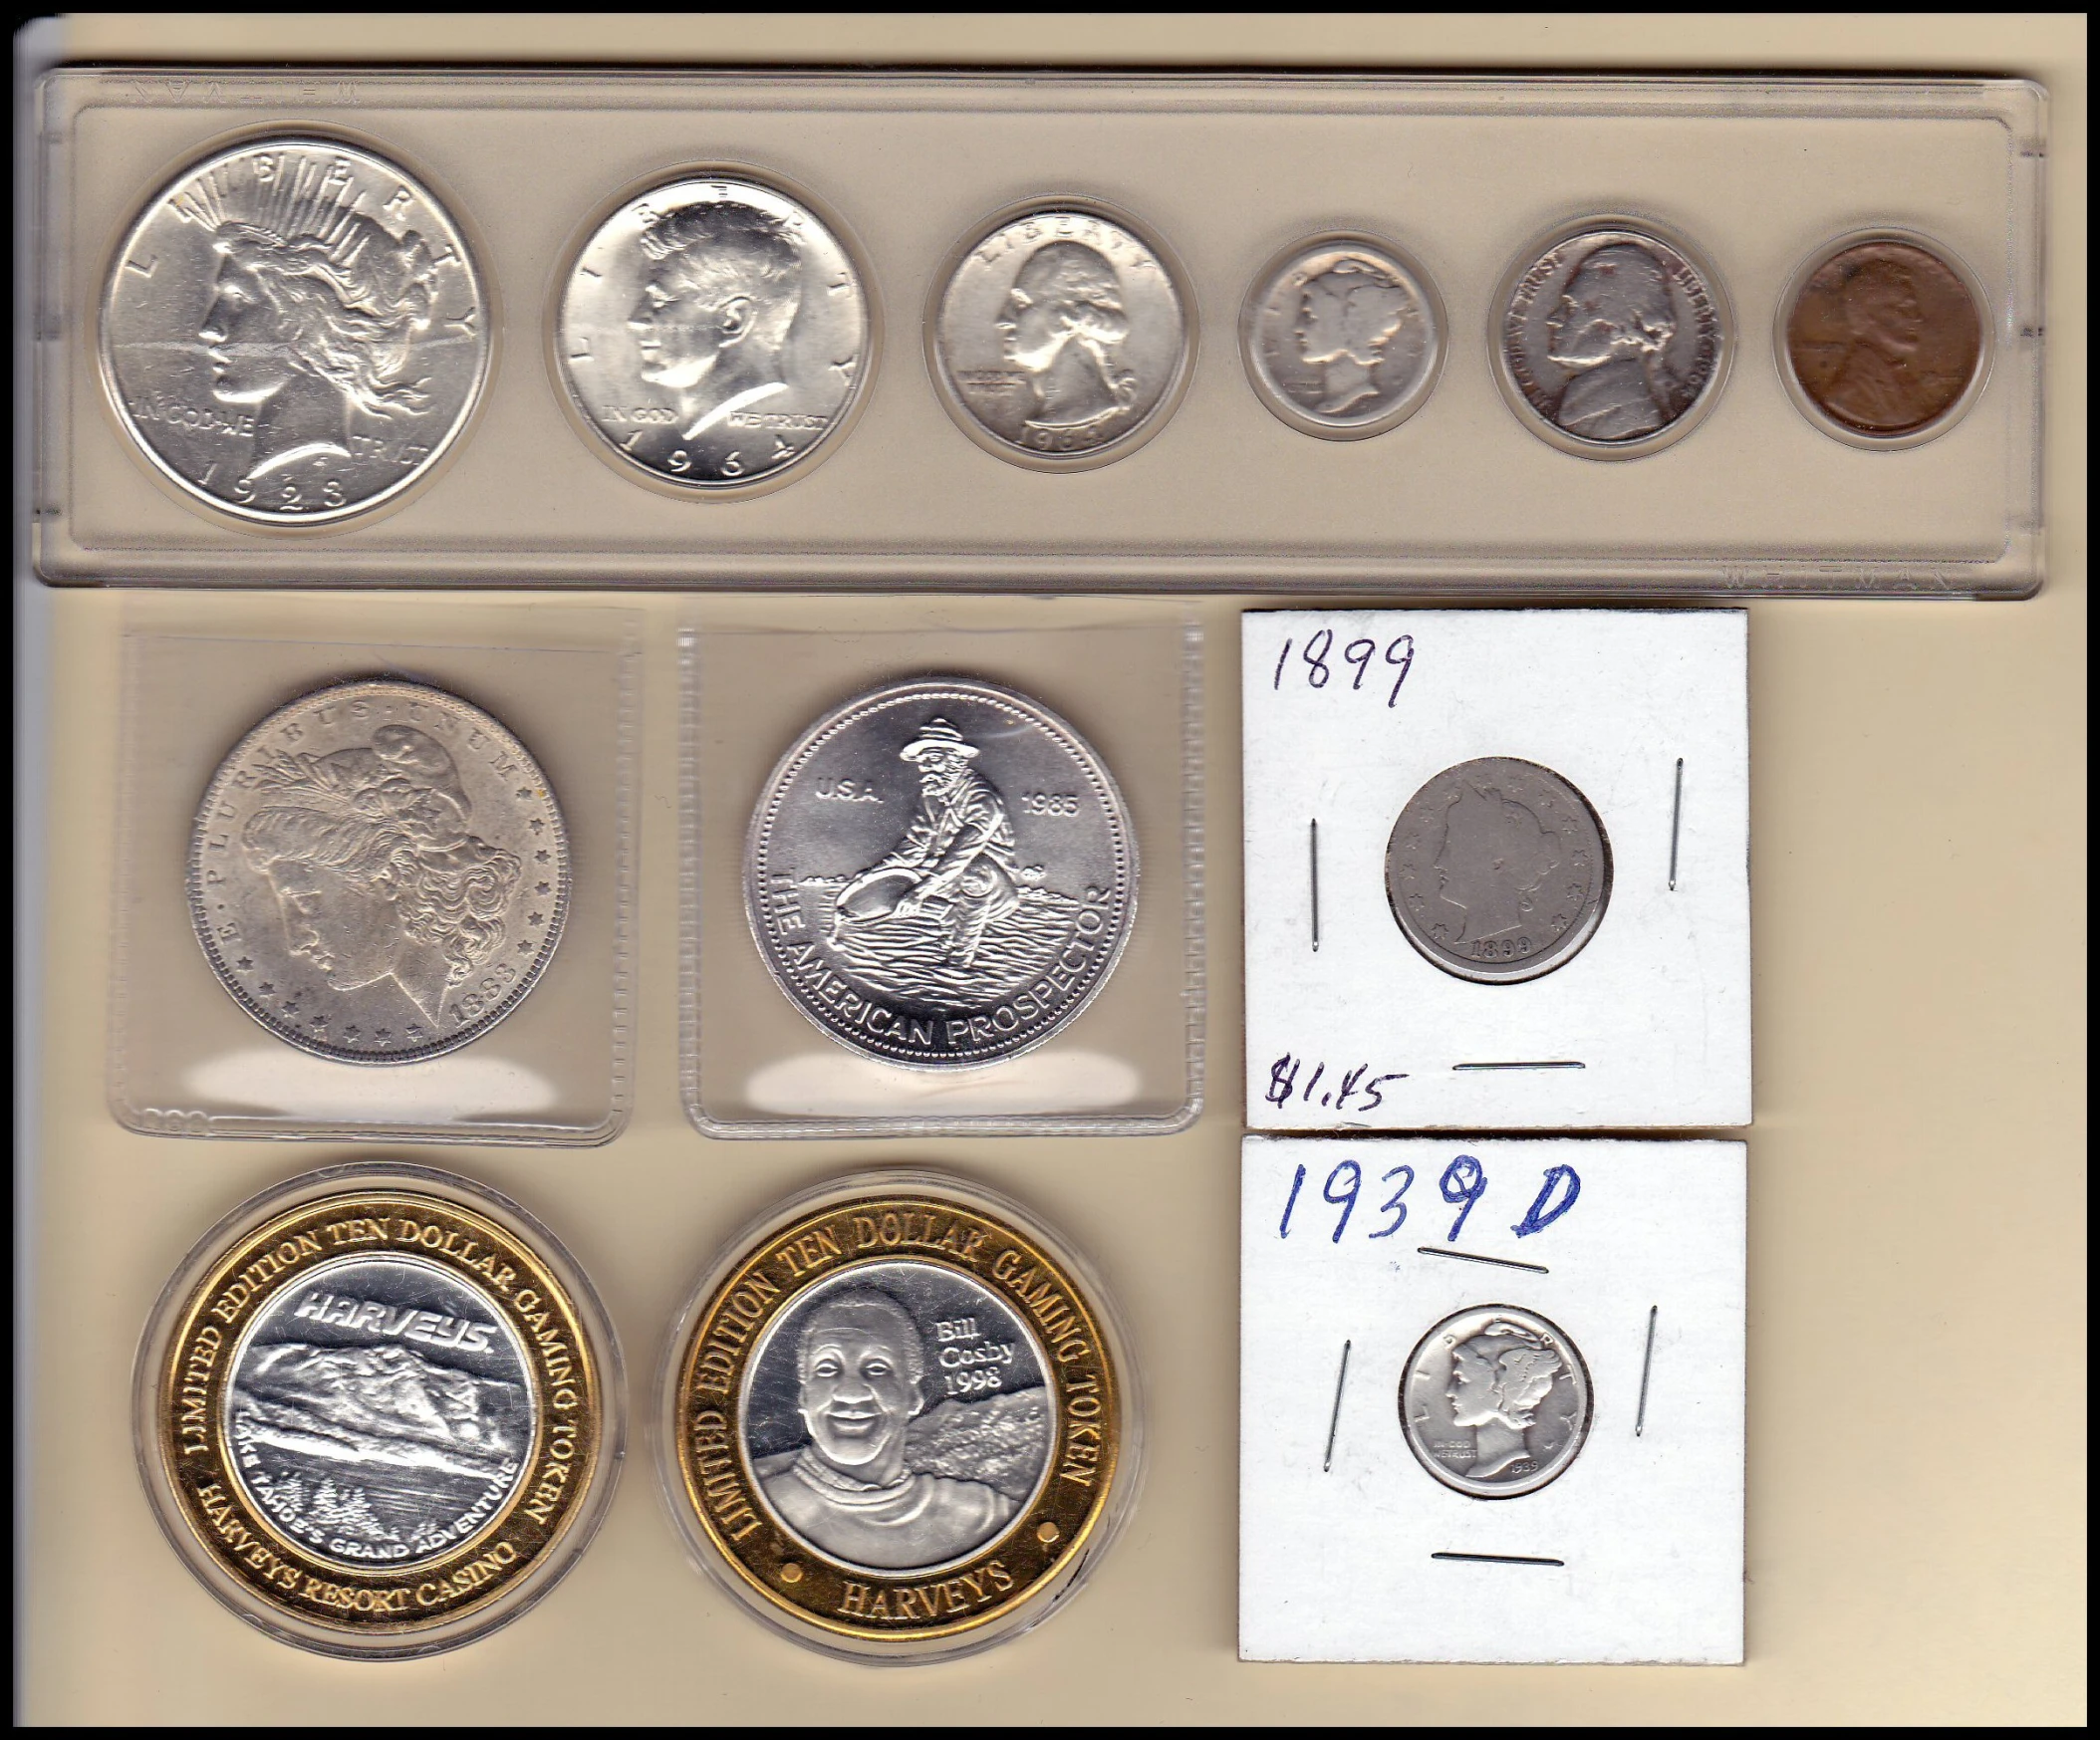 an assortment of american coin designs